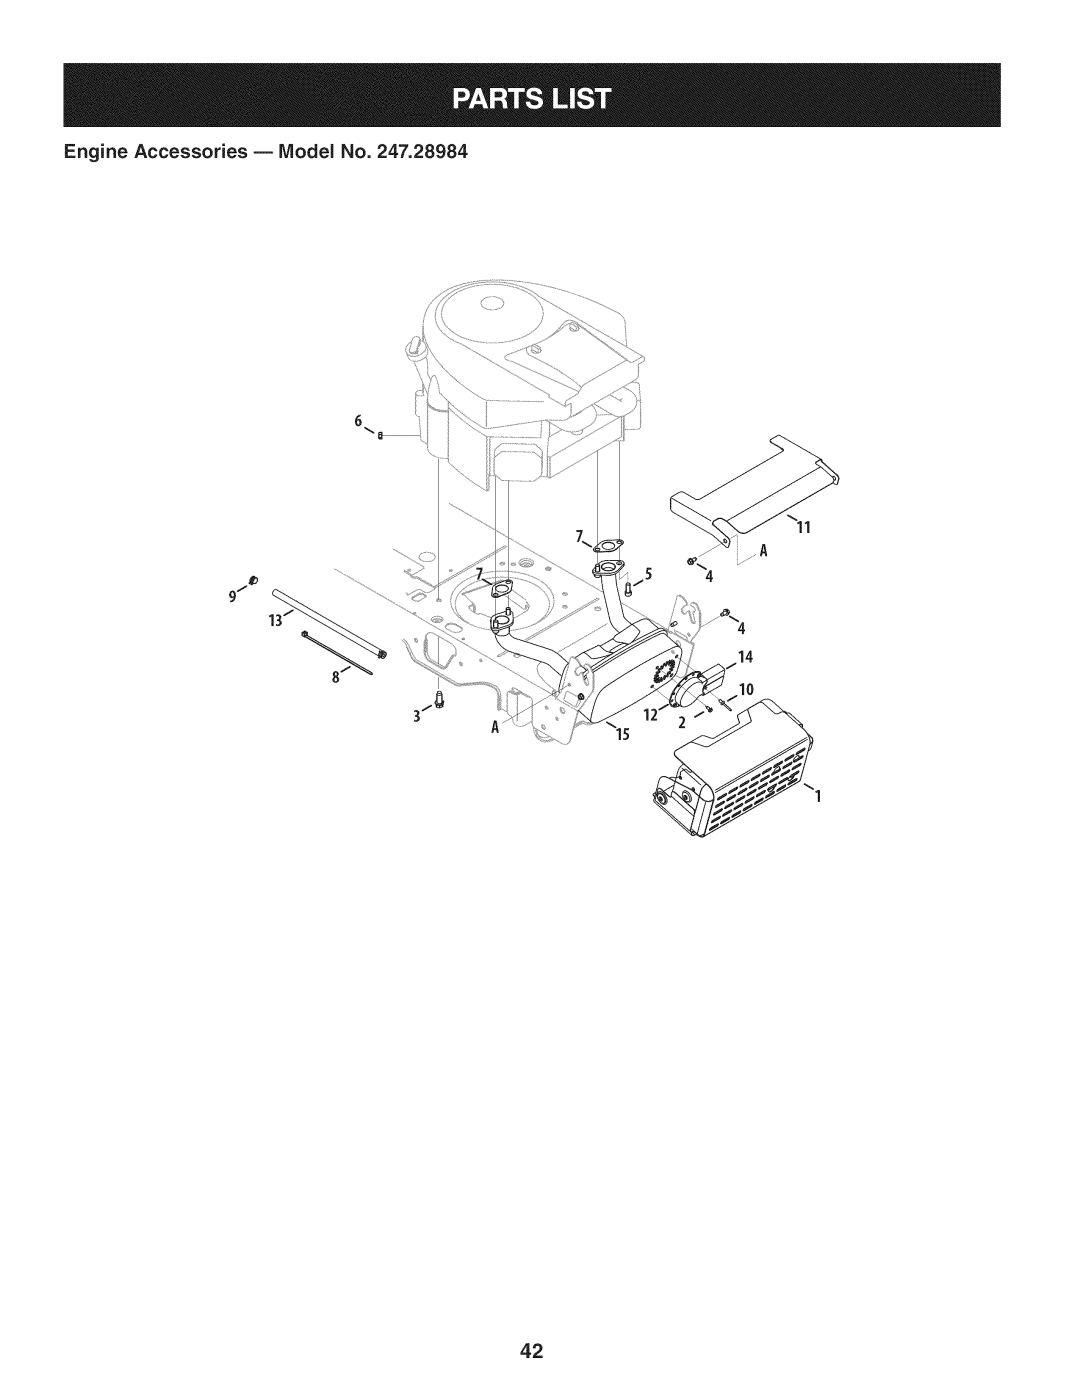 Craftsman PGT9000, 247.28984 manual Engine Accessories B IViodel No, 4b 9 